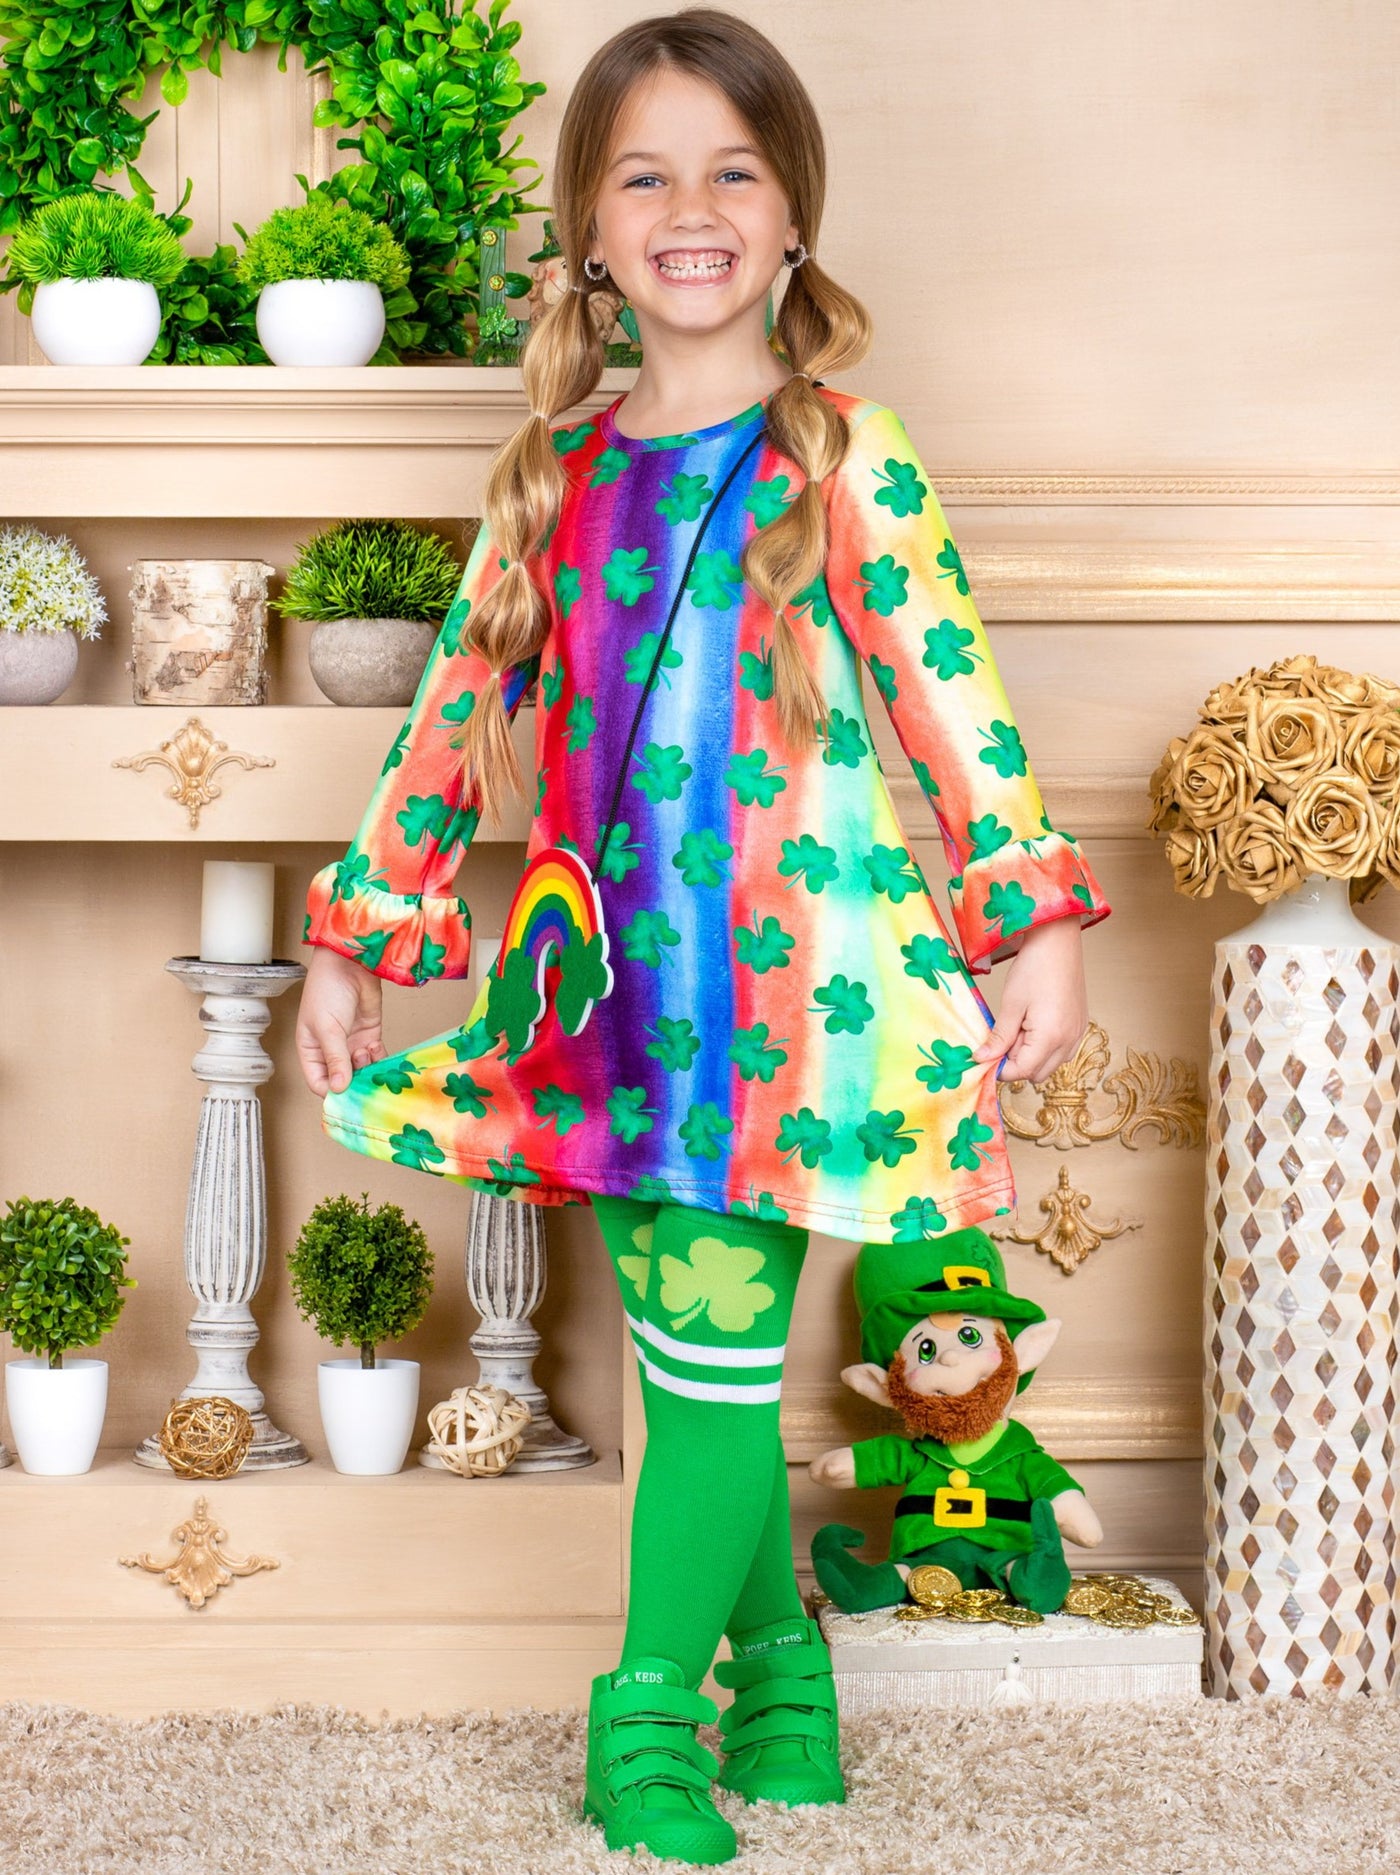 Girls "Clover" Rainbow Print Dress, Purse and Socks Set 2T-10T St Patricks day